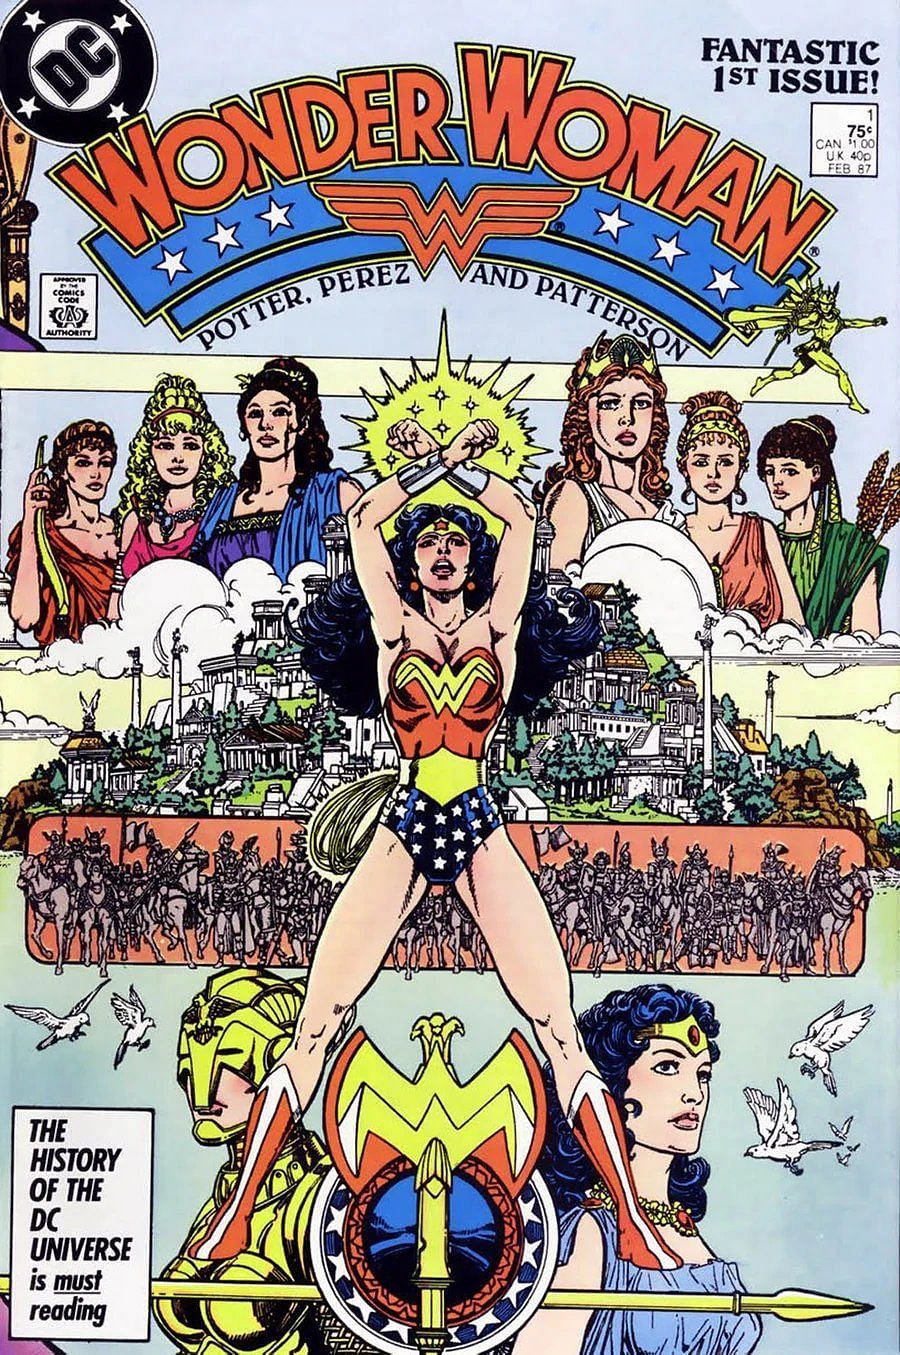 Wonder Woman by George Perez (Image via DC Comics)